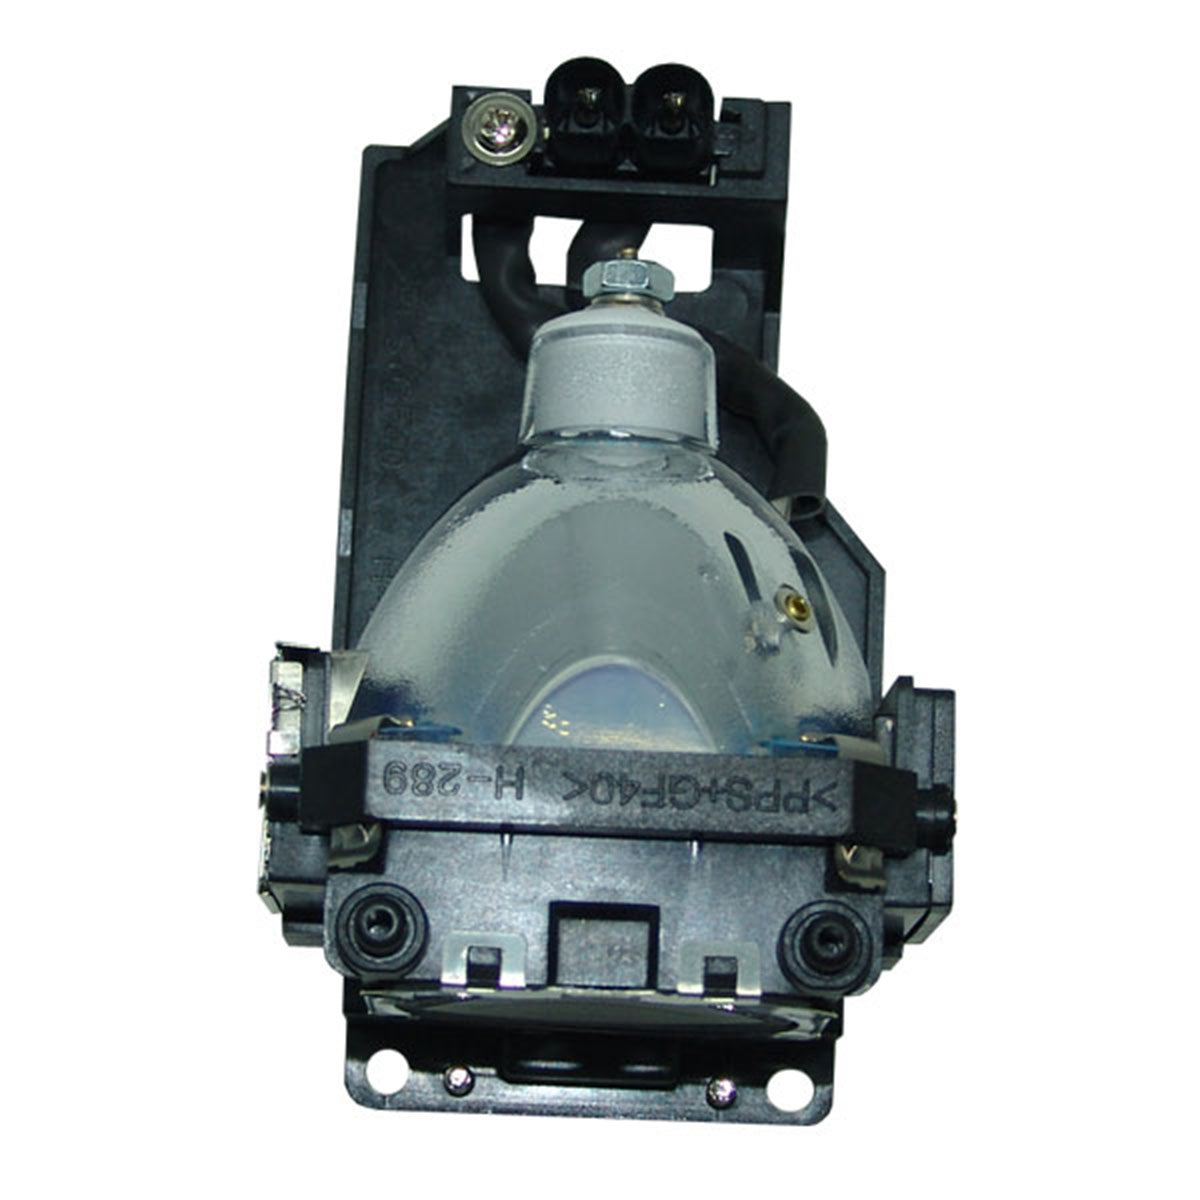 Sanyo POA-LMP94 Compatible Projector Lamp Module